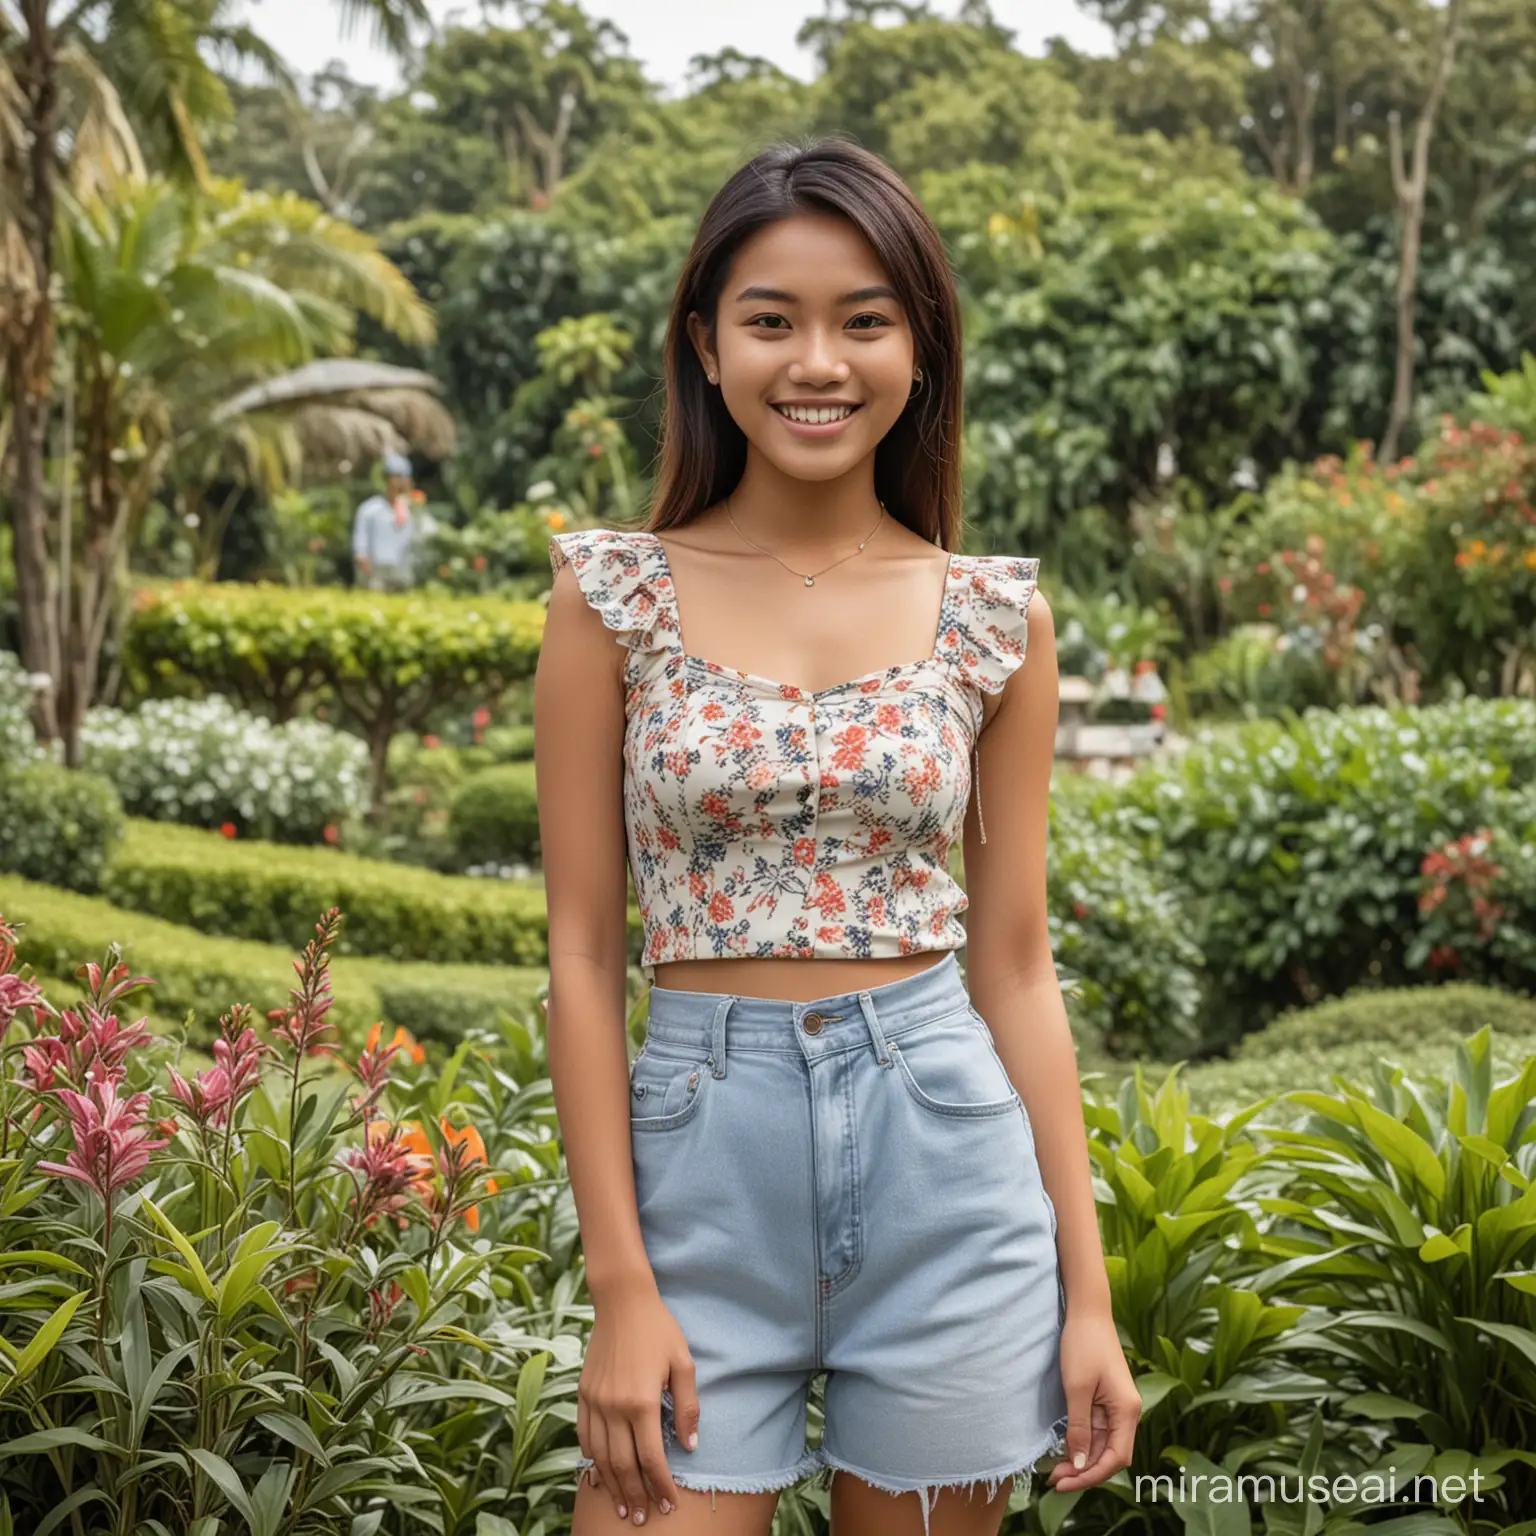 Stylish Indonesian Teenager Poses in Tea Garden